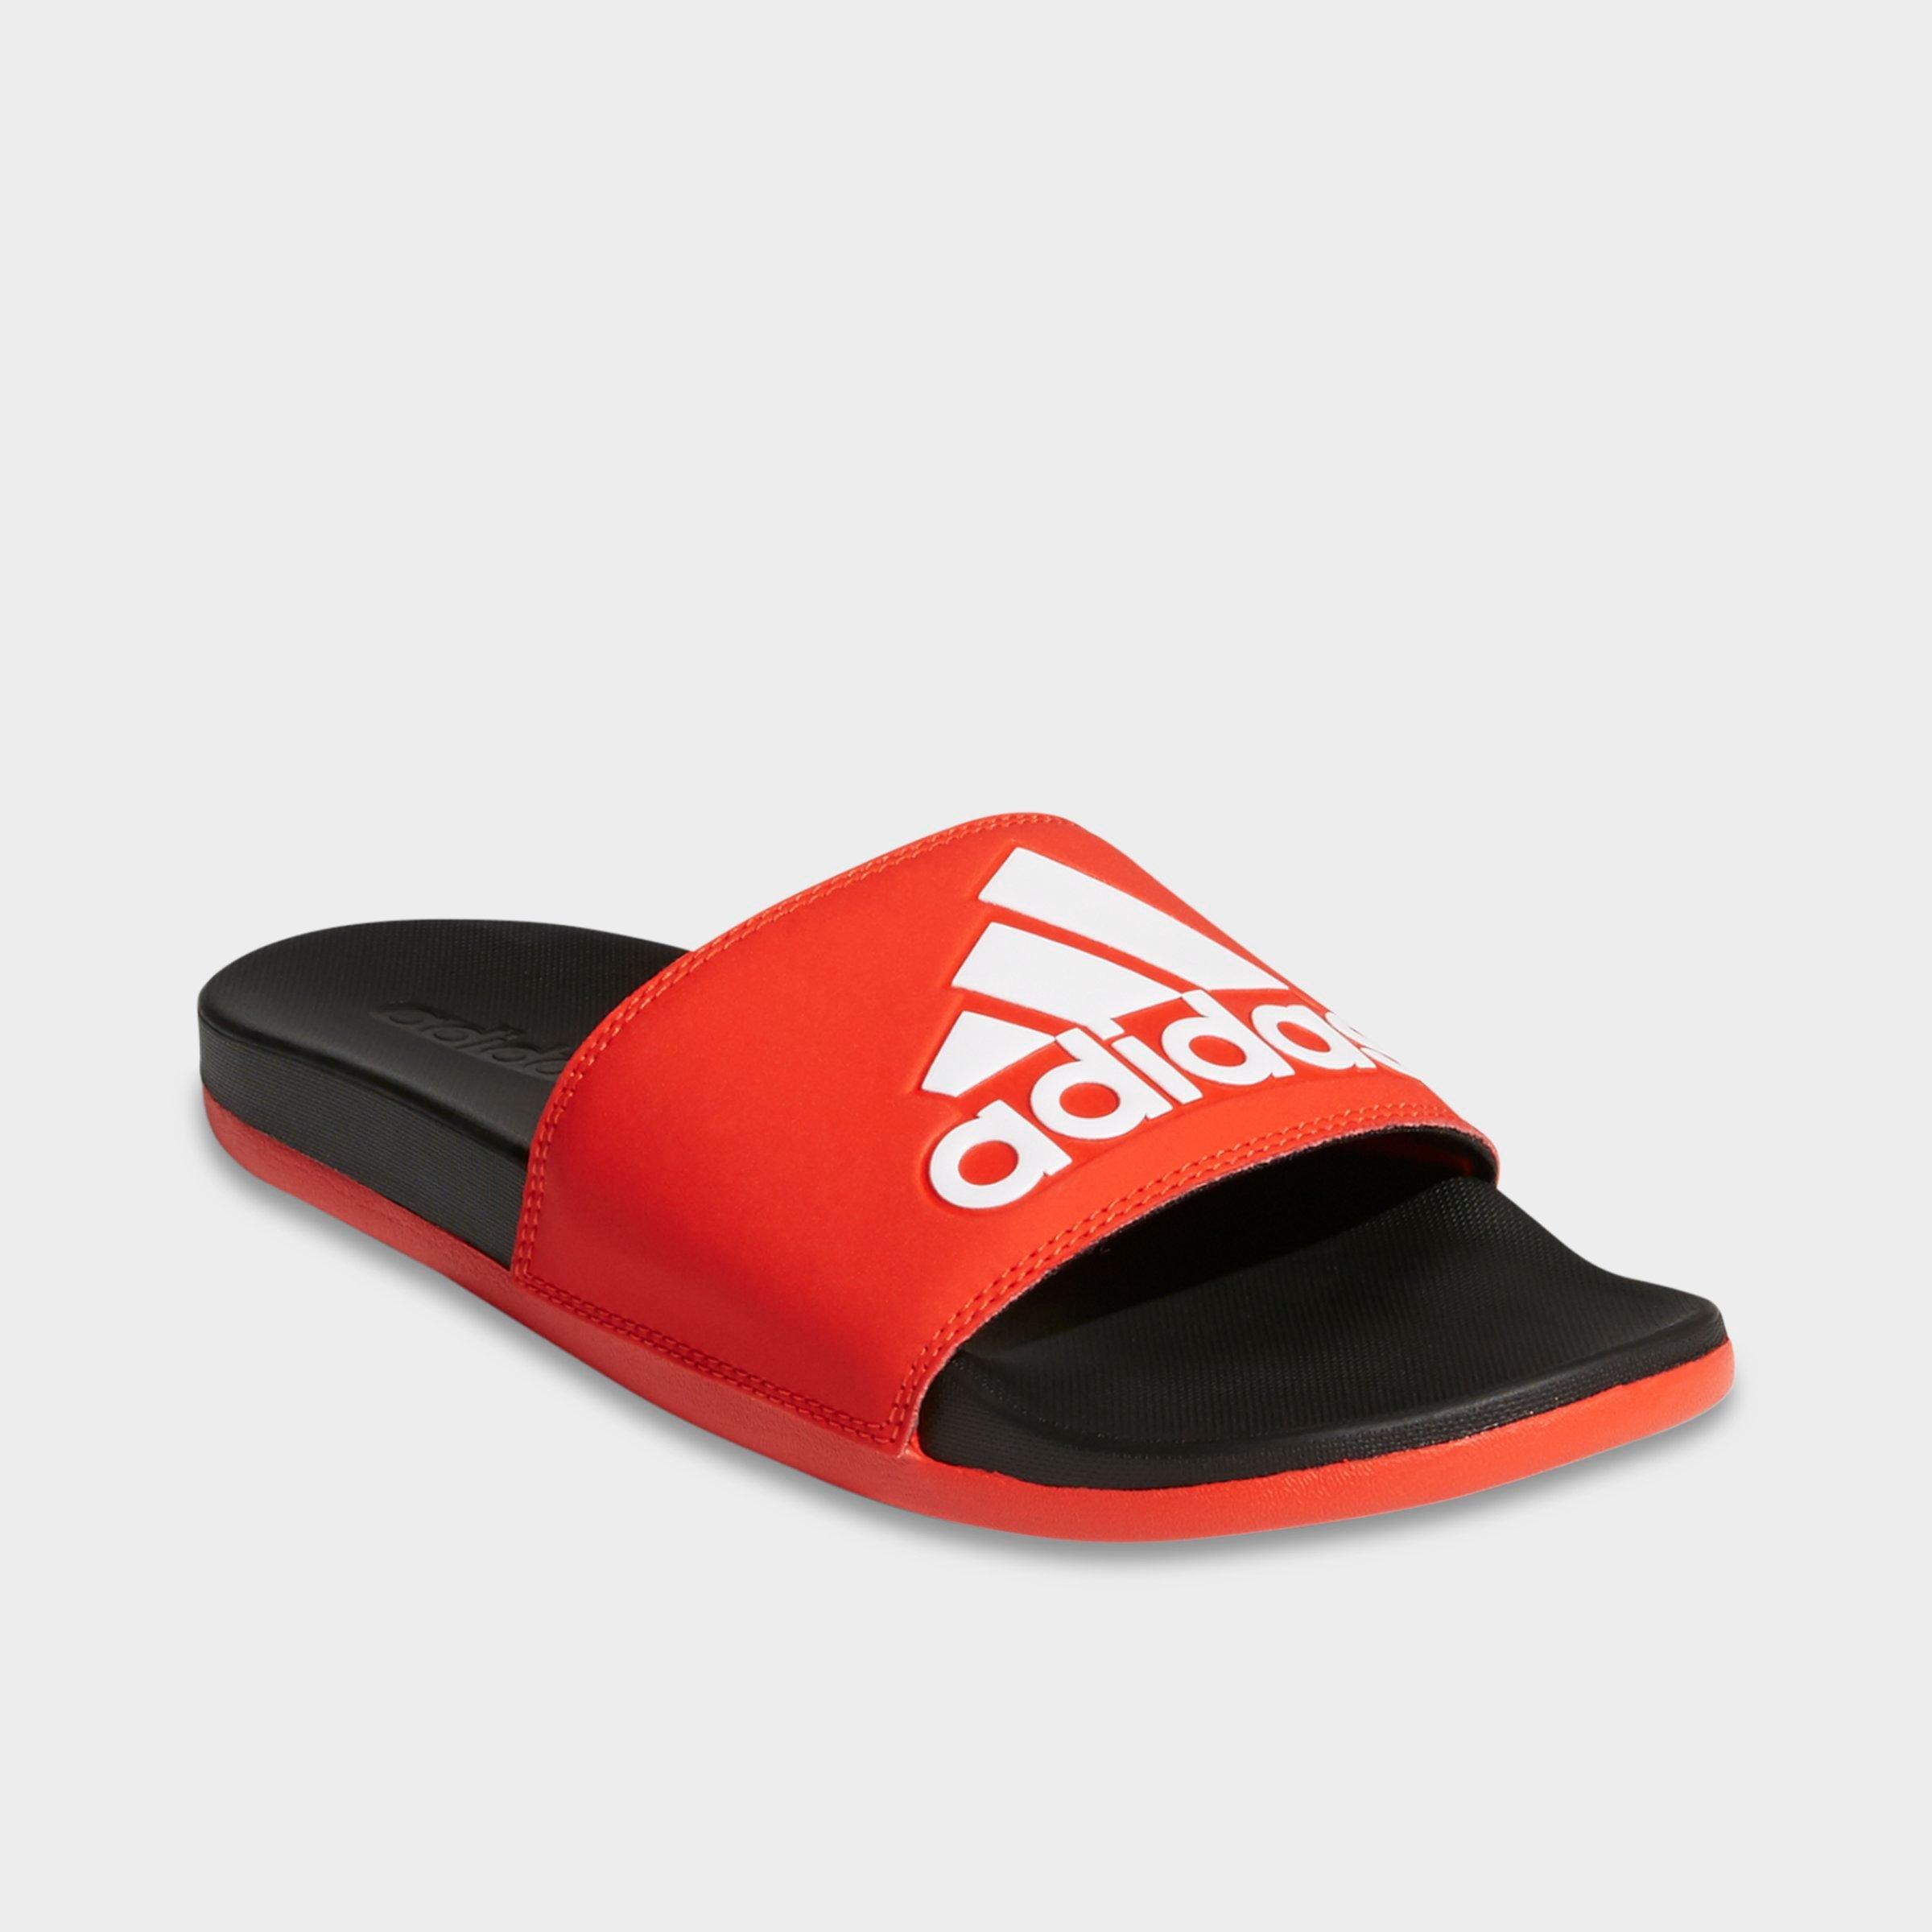 adidas adilette cloudfoam red